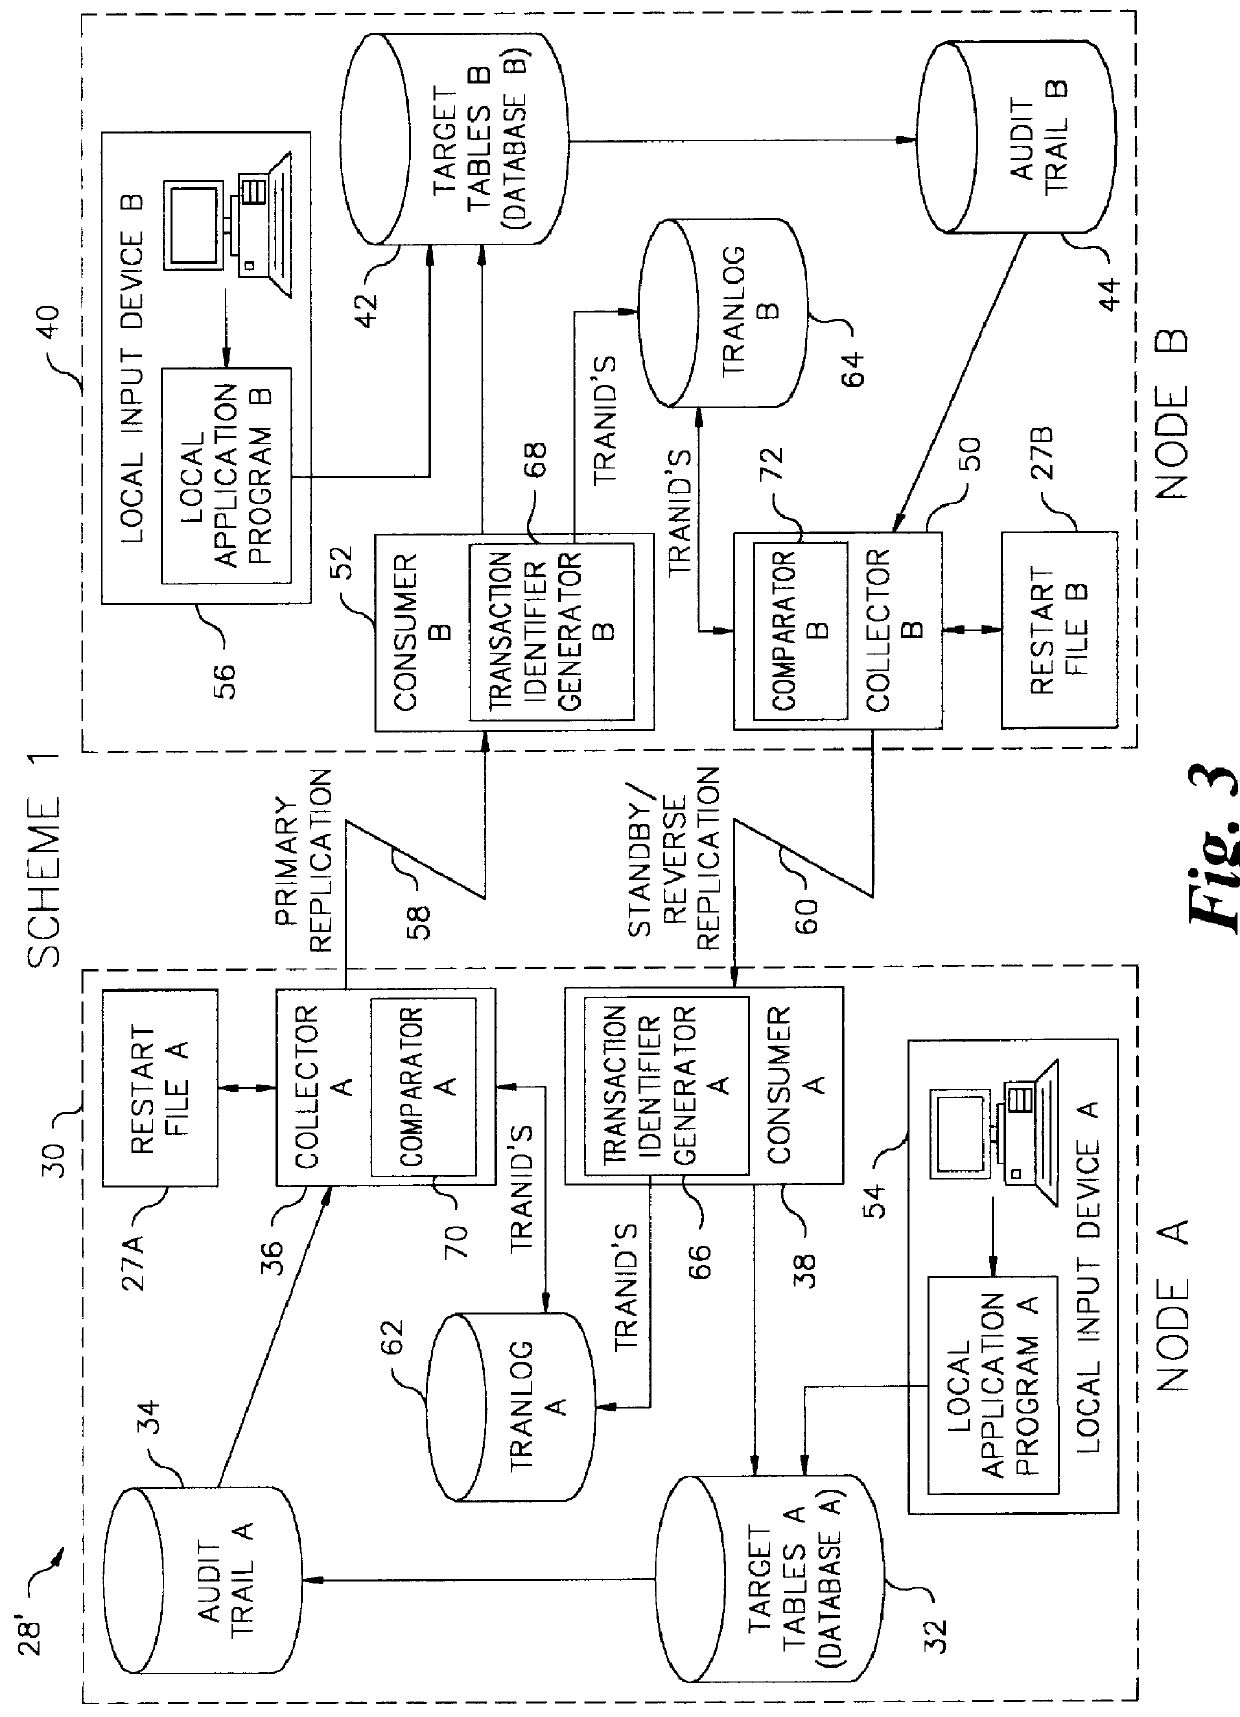 Bidirectional database replication scheme for controlling ping-ponging